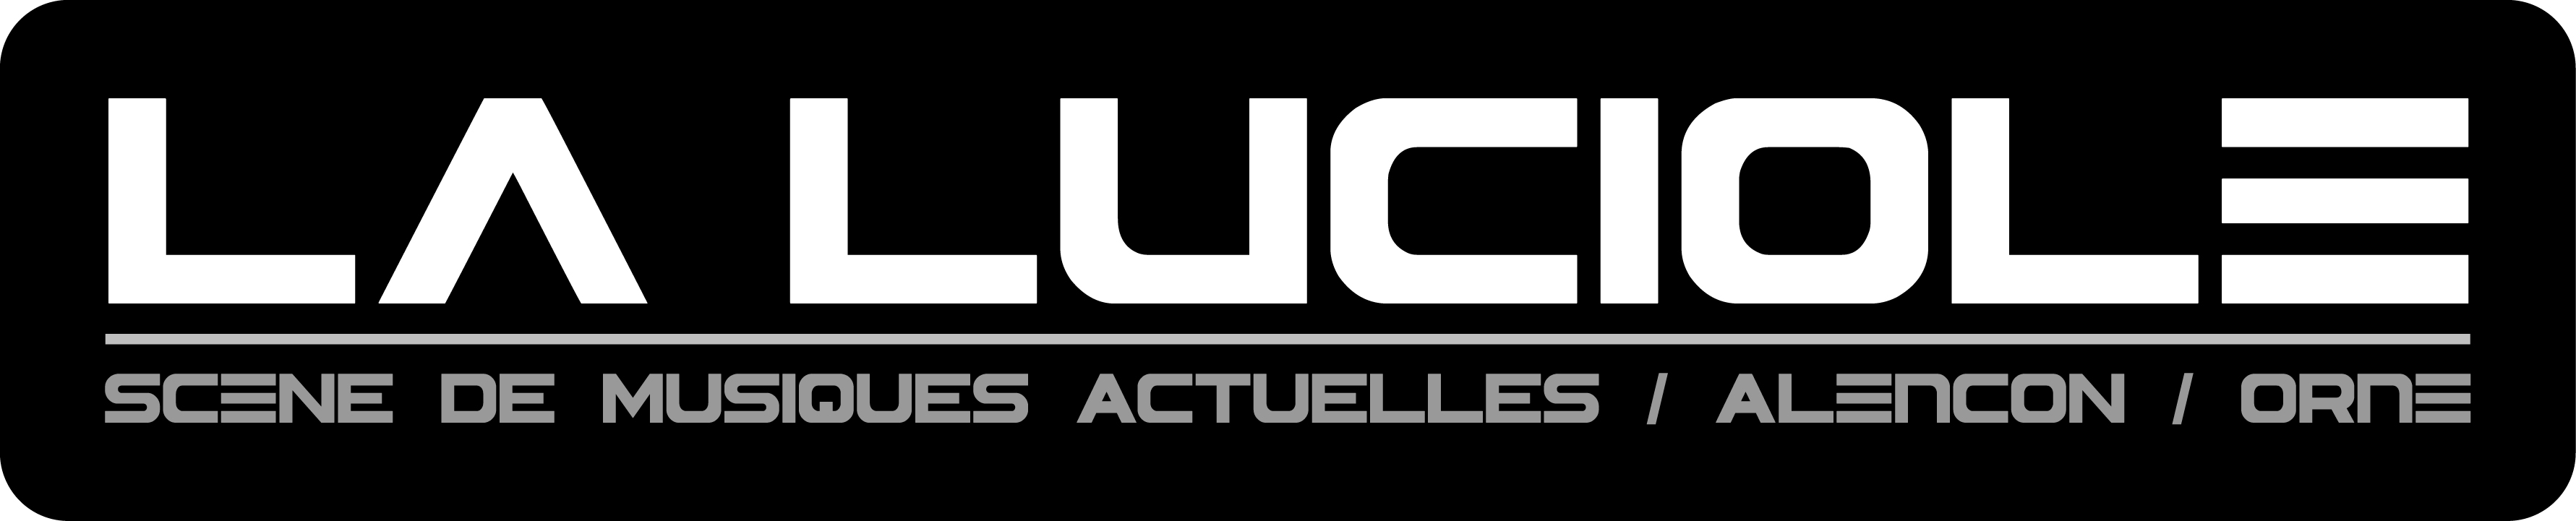 logo_luciole_janv_2015_avec_aplat_noir_blanc.jpg